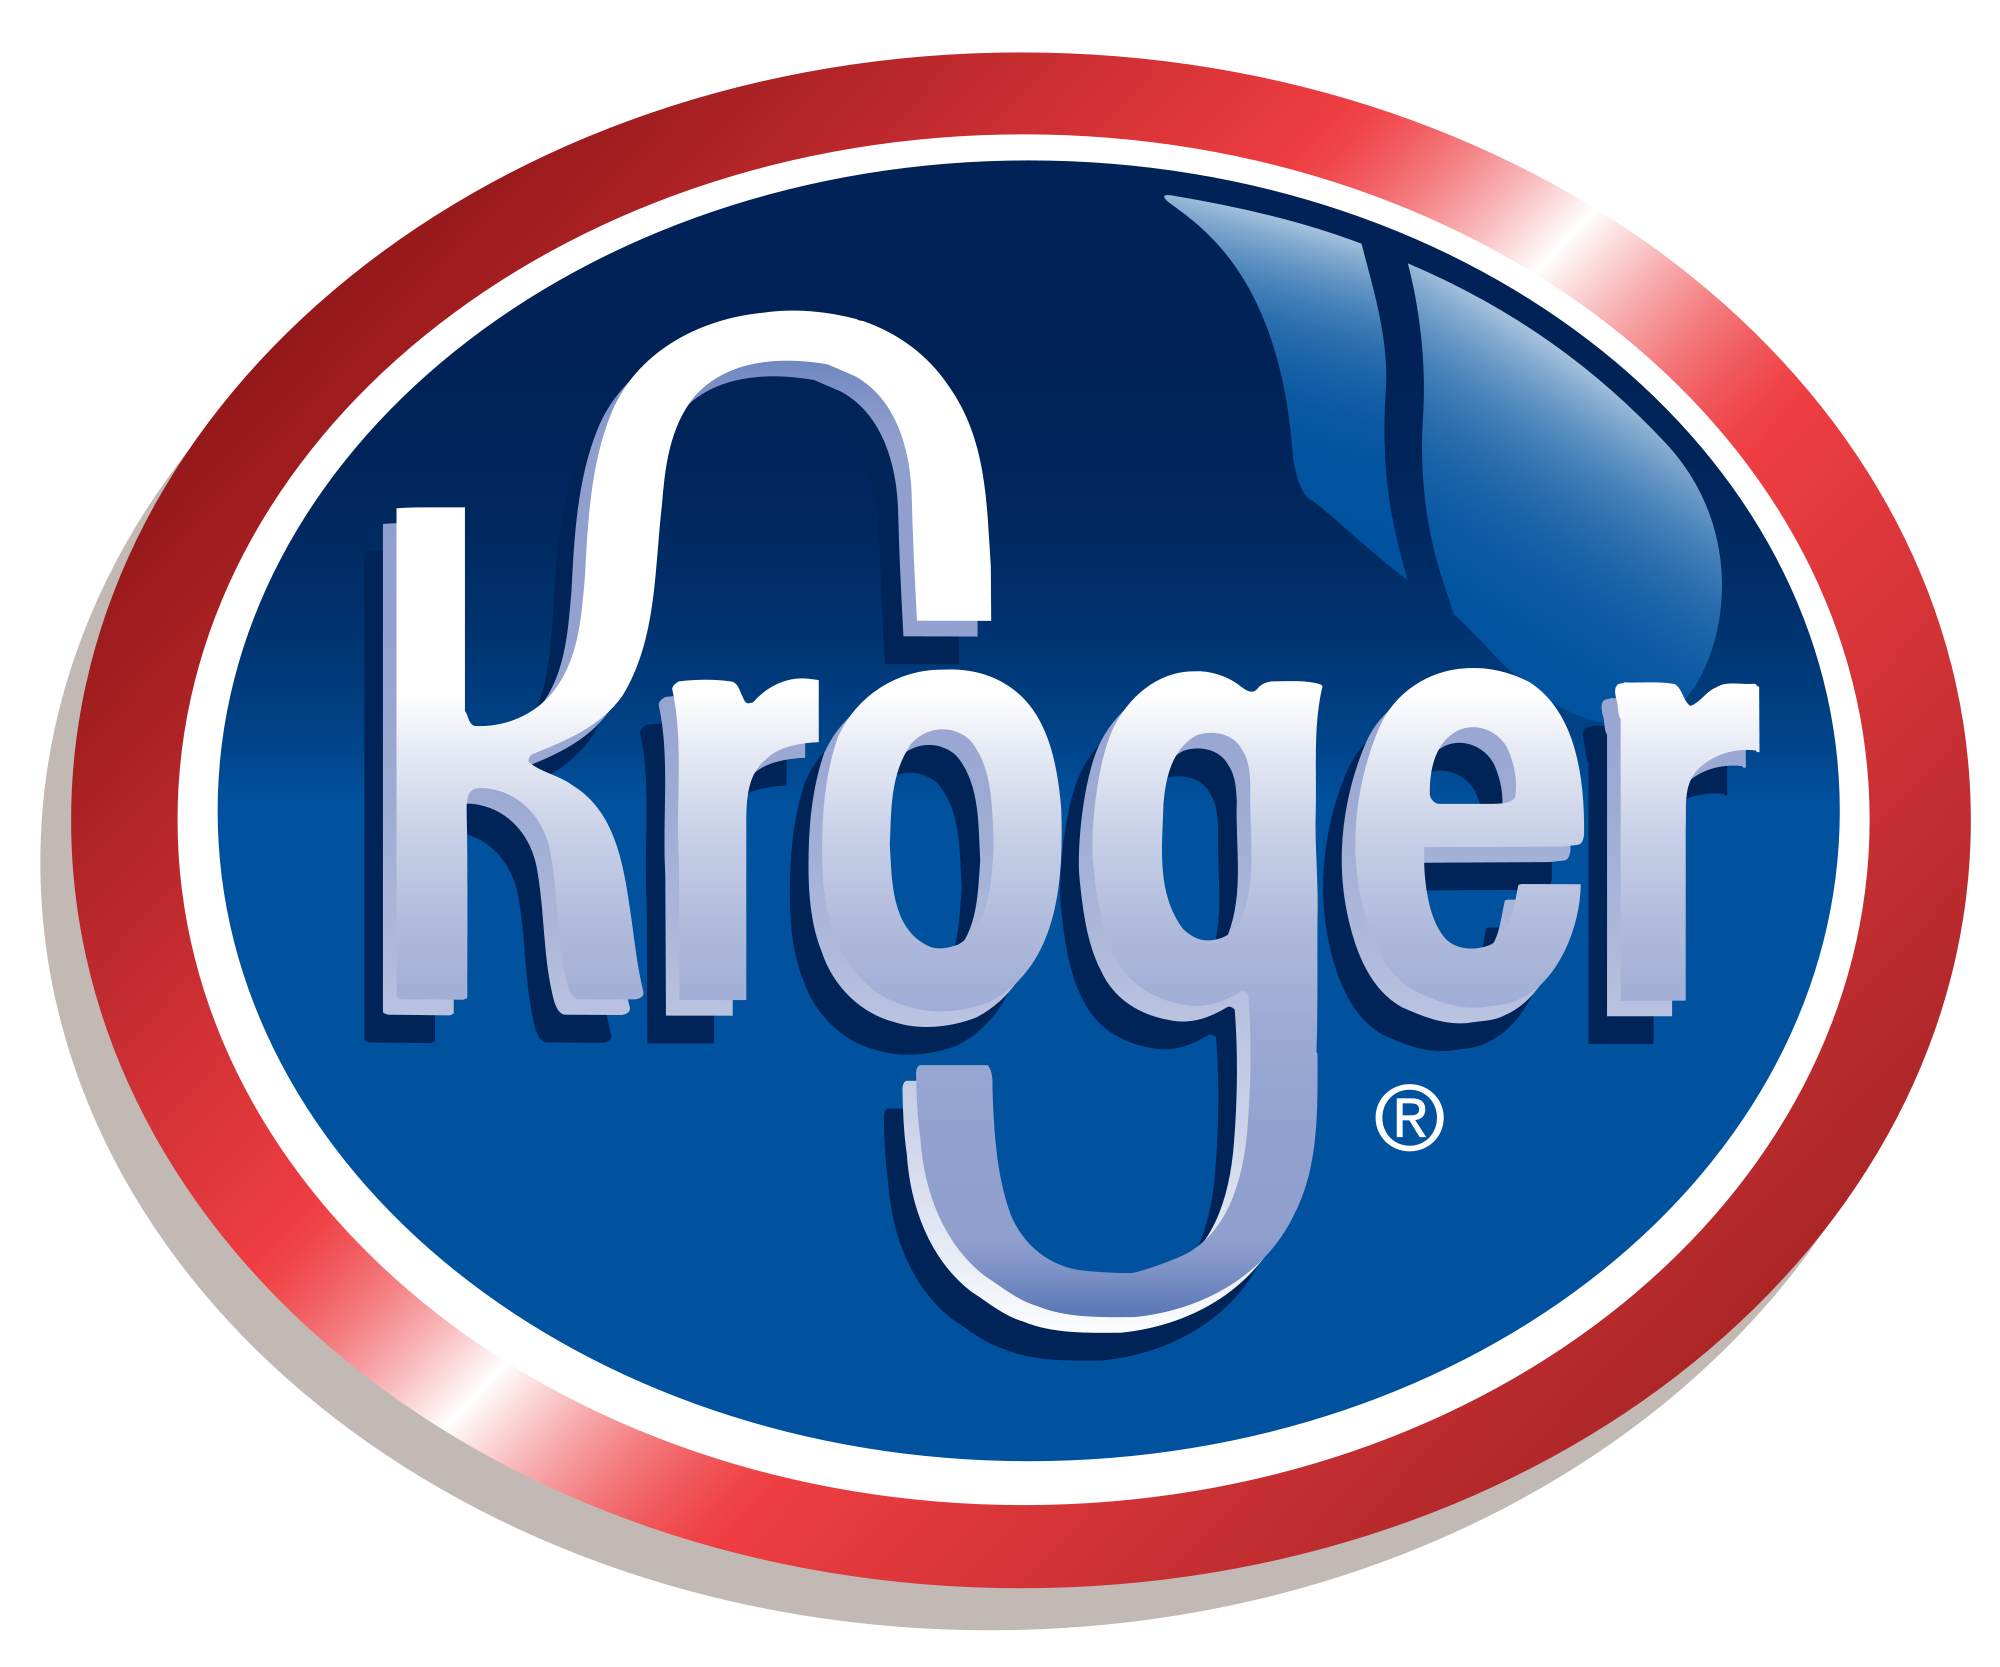 Kroger Logo PNG Photos